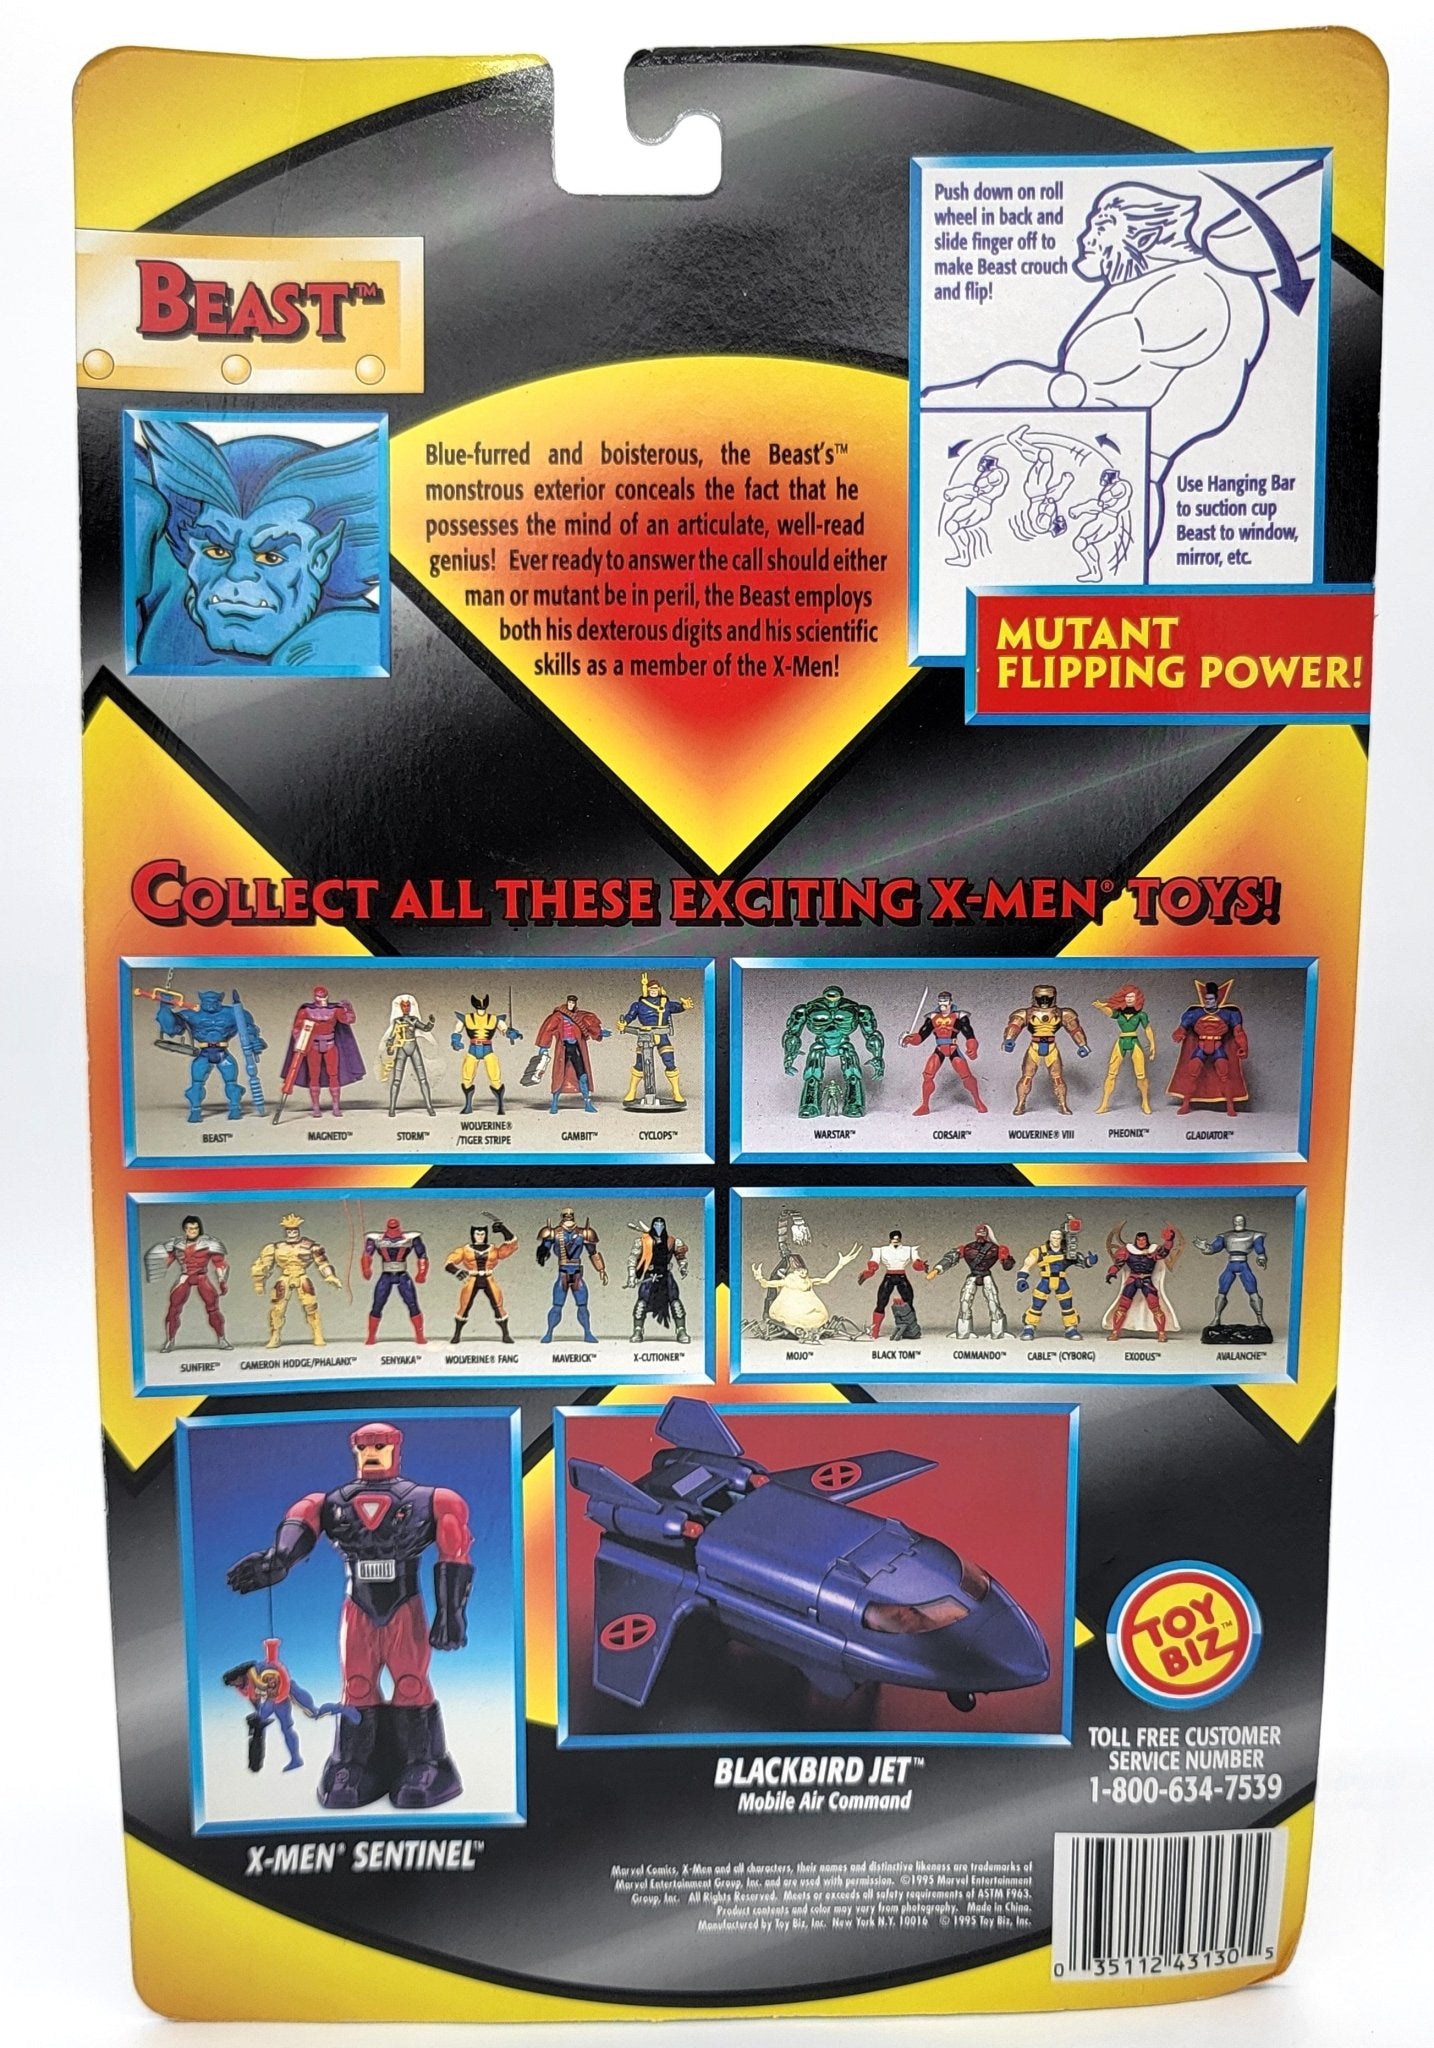 Toy Biz - Toy Biz | Classic X-Men - Beast 1995 | Vintage Action Figure - Action Figures - Steady Bunny Shop